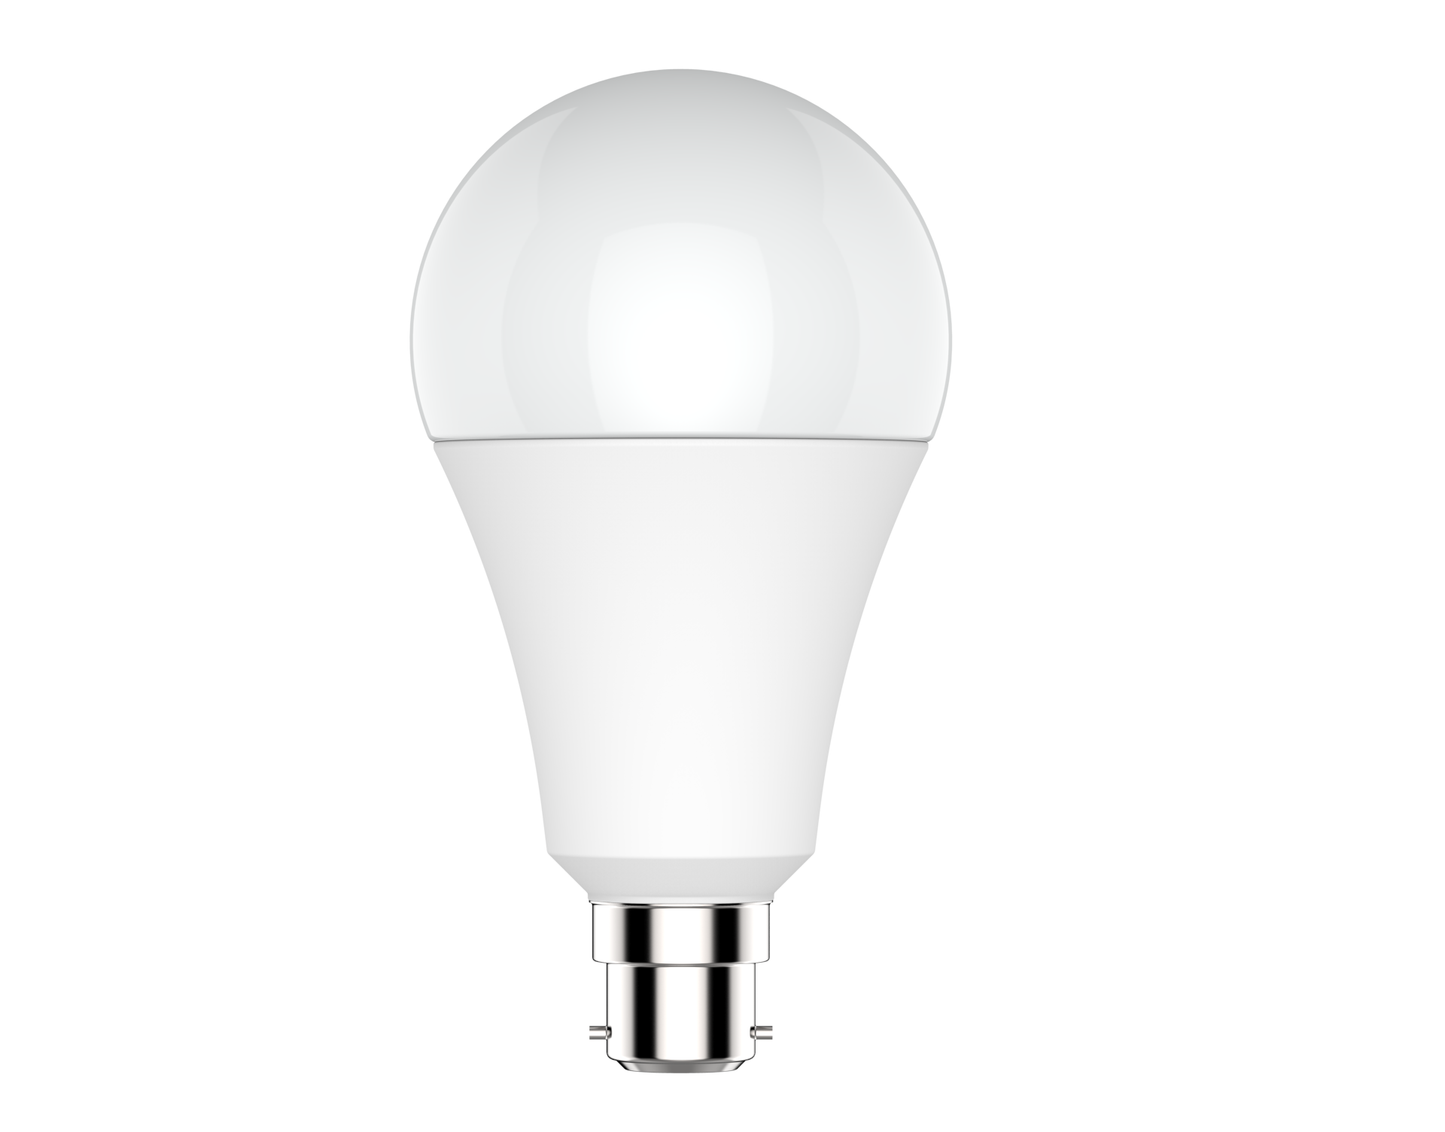 12 Watt LED Bulb - EECO